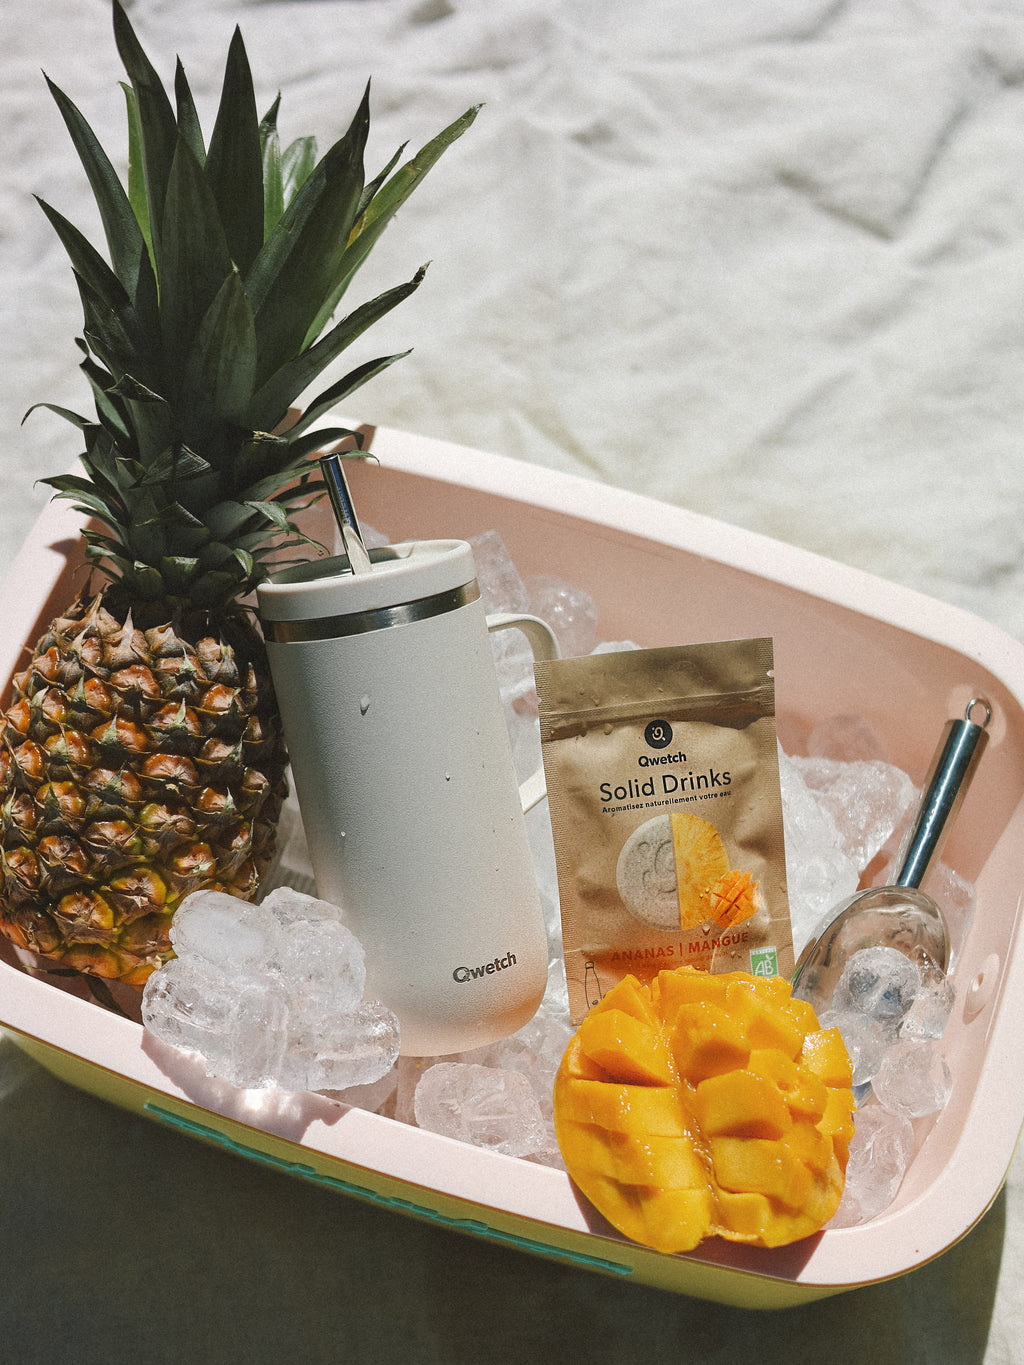 Solid Drinks - Pineapple Mango